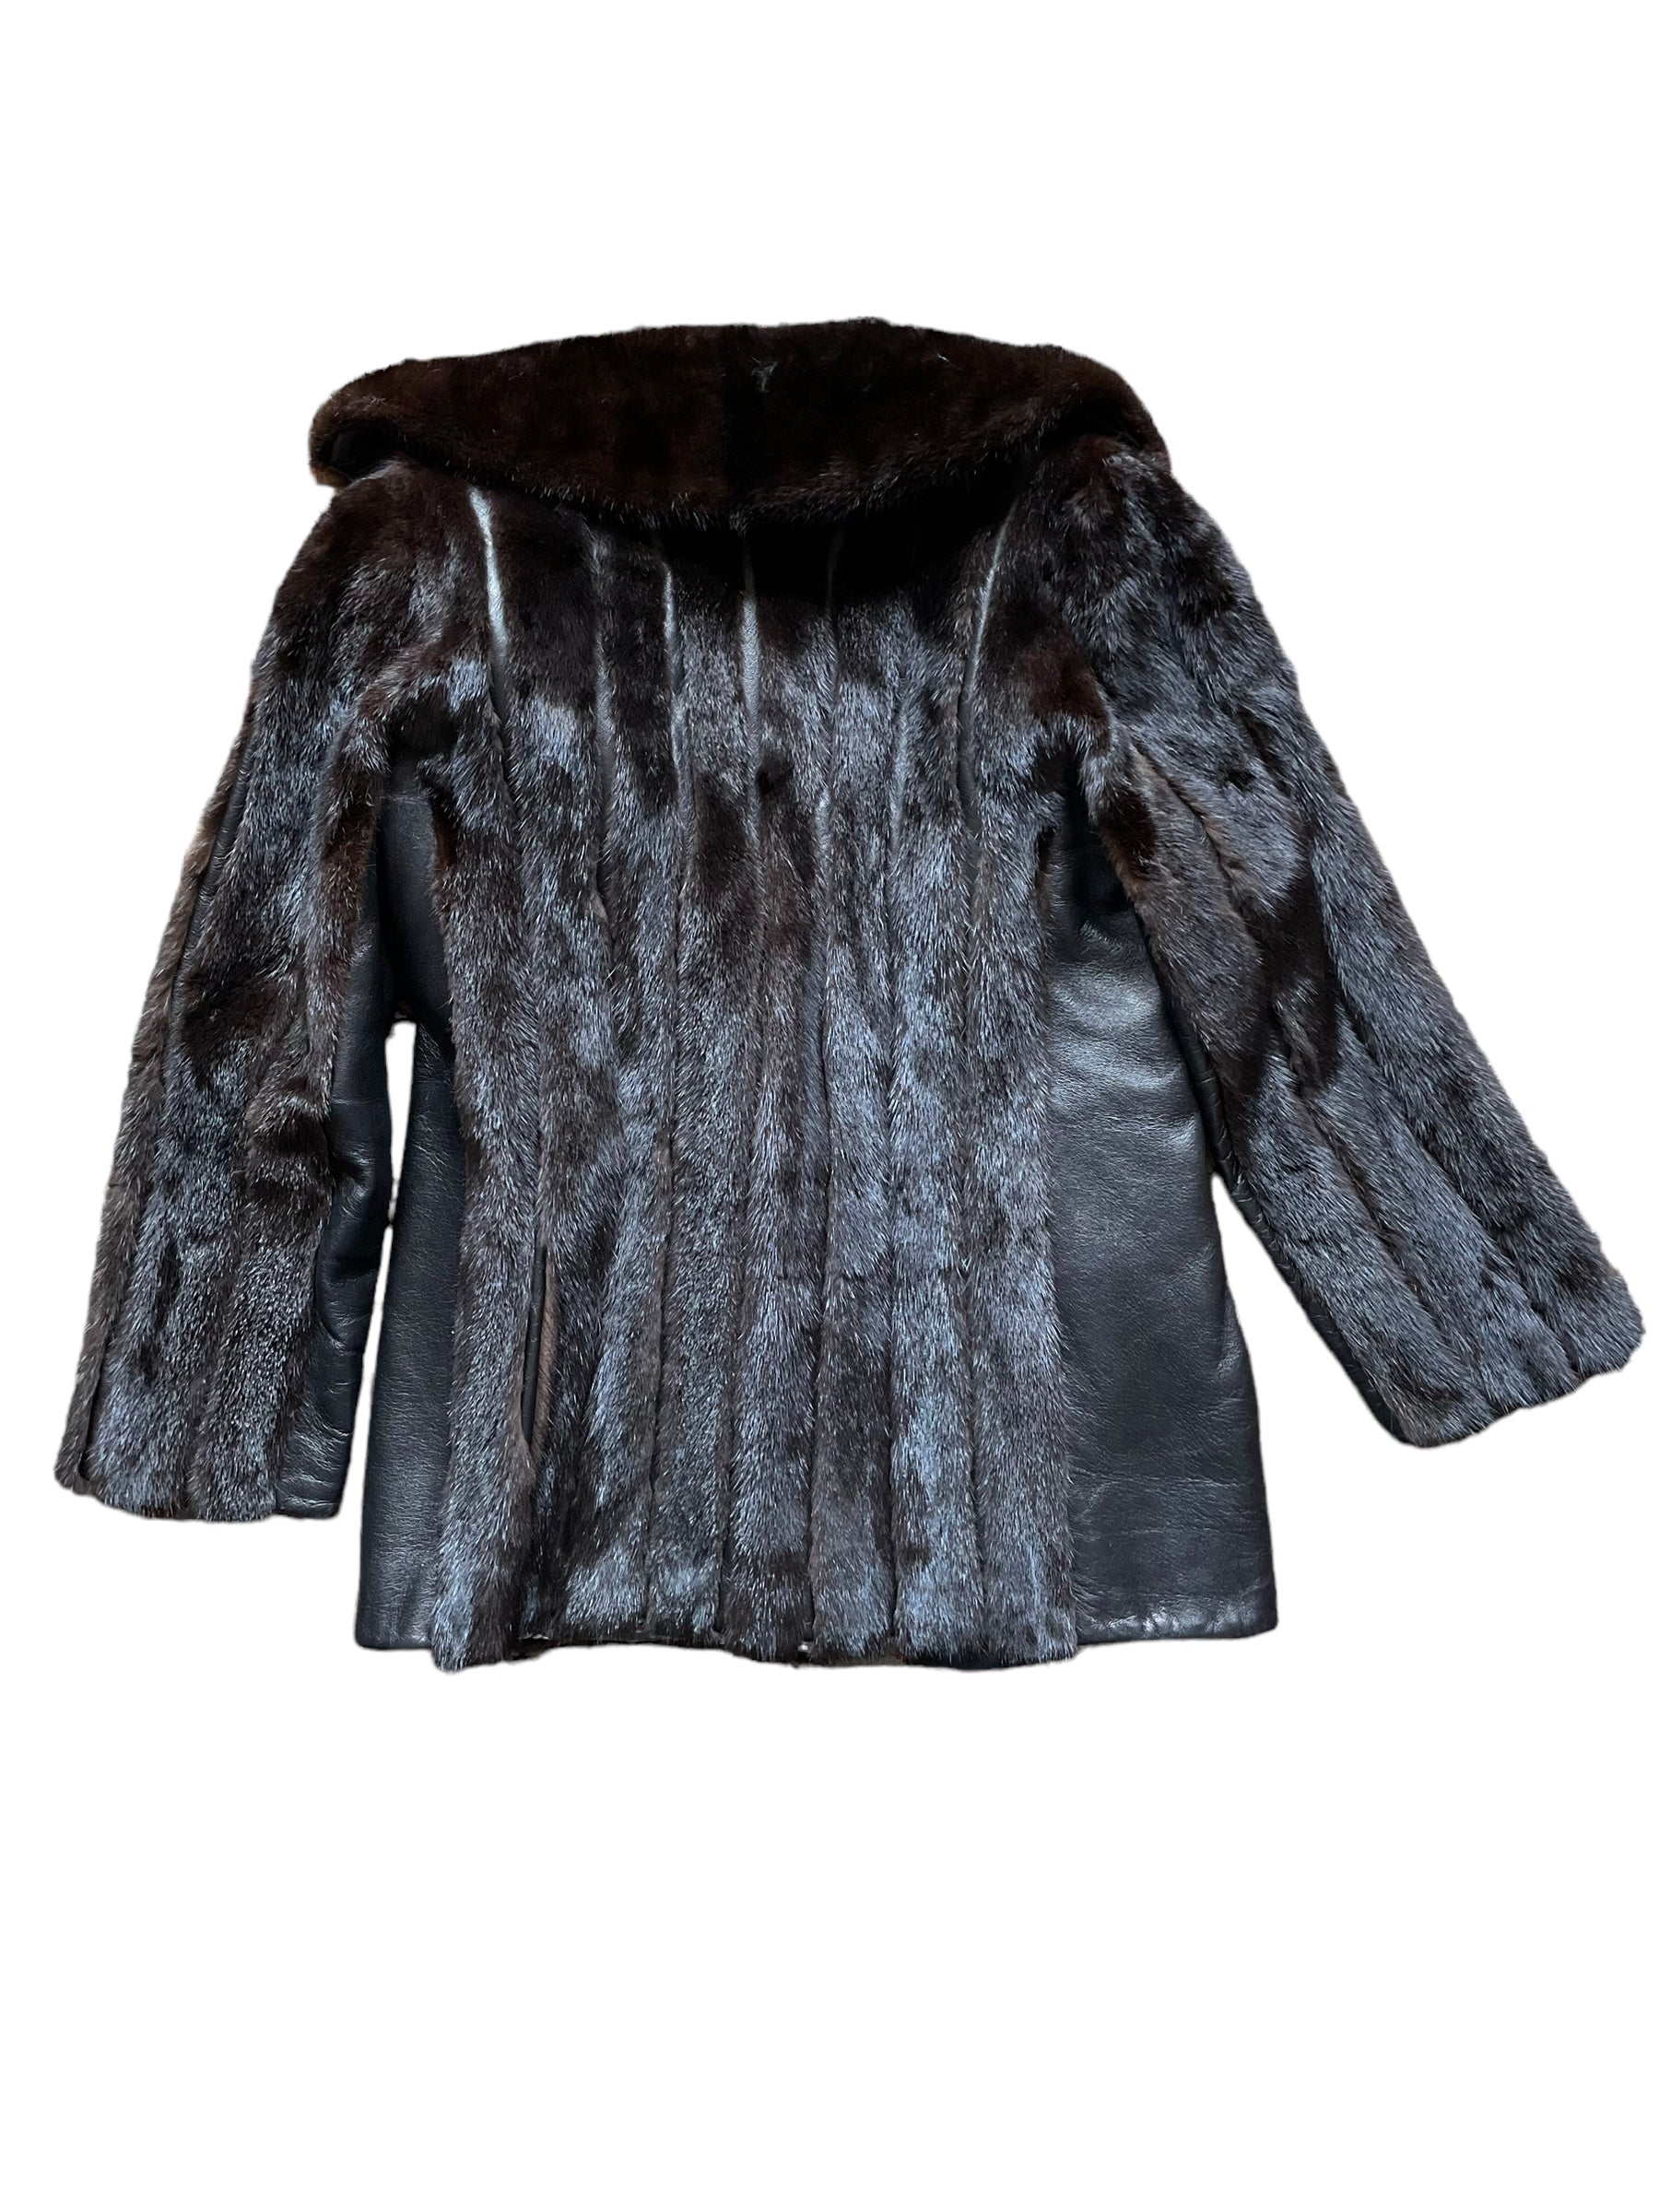 Full back view of Vintage 1940s-50s Leather and Fur Belted Coat SZ M-L | Seattle True Vintage | Barn Owl Vintage Coats